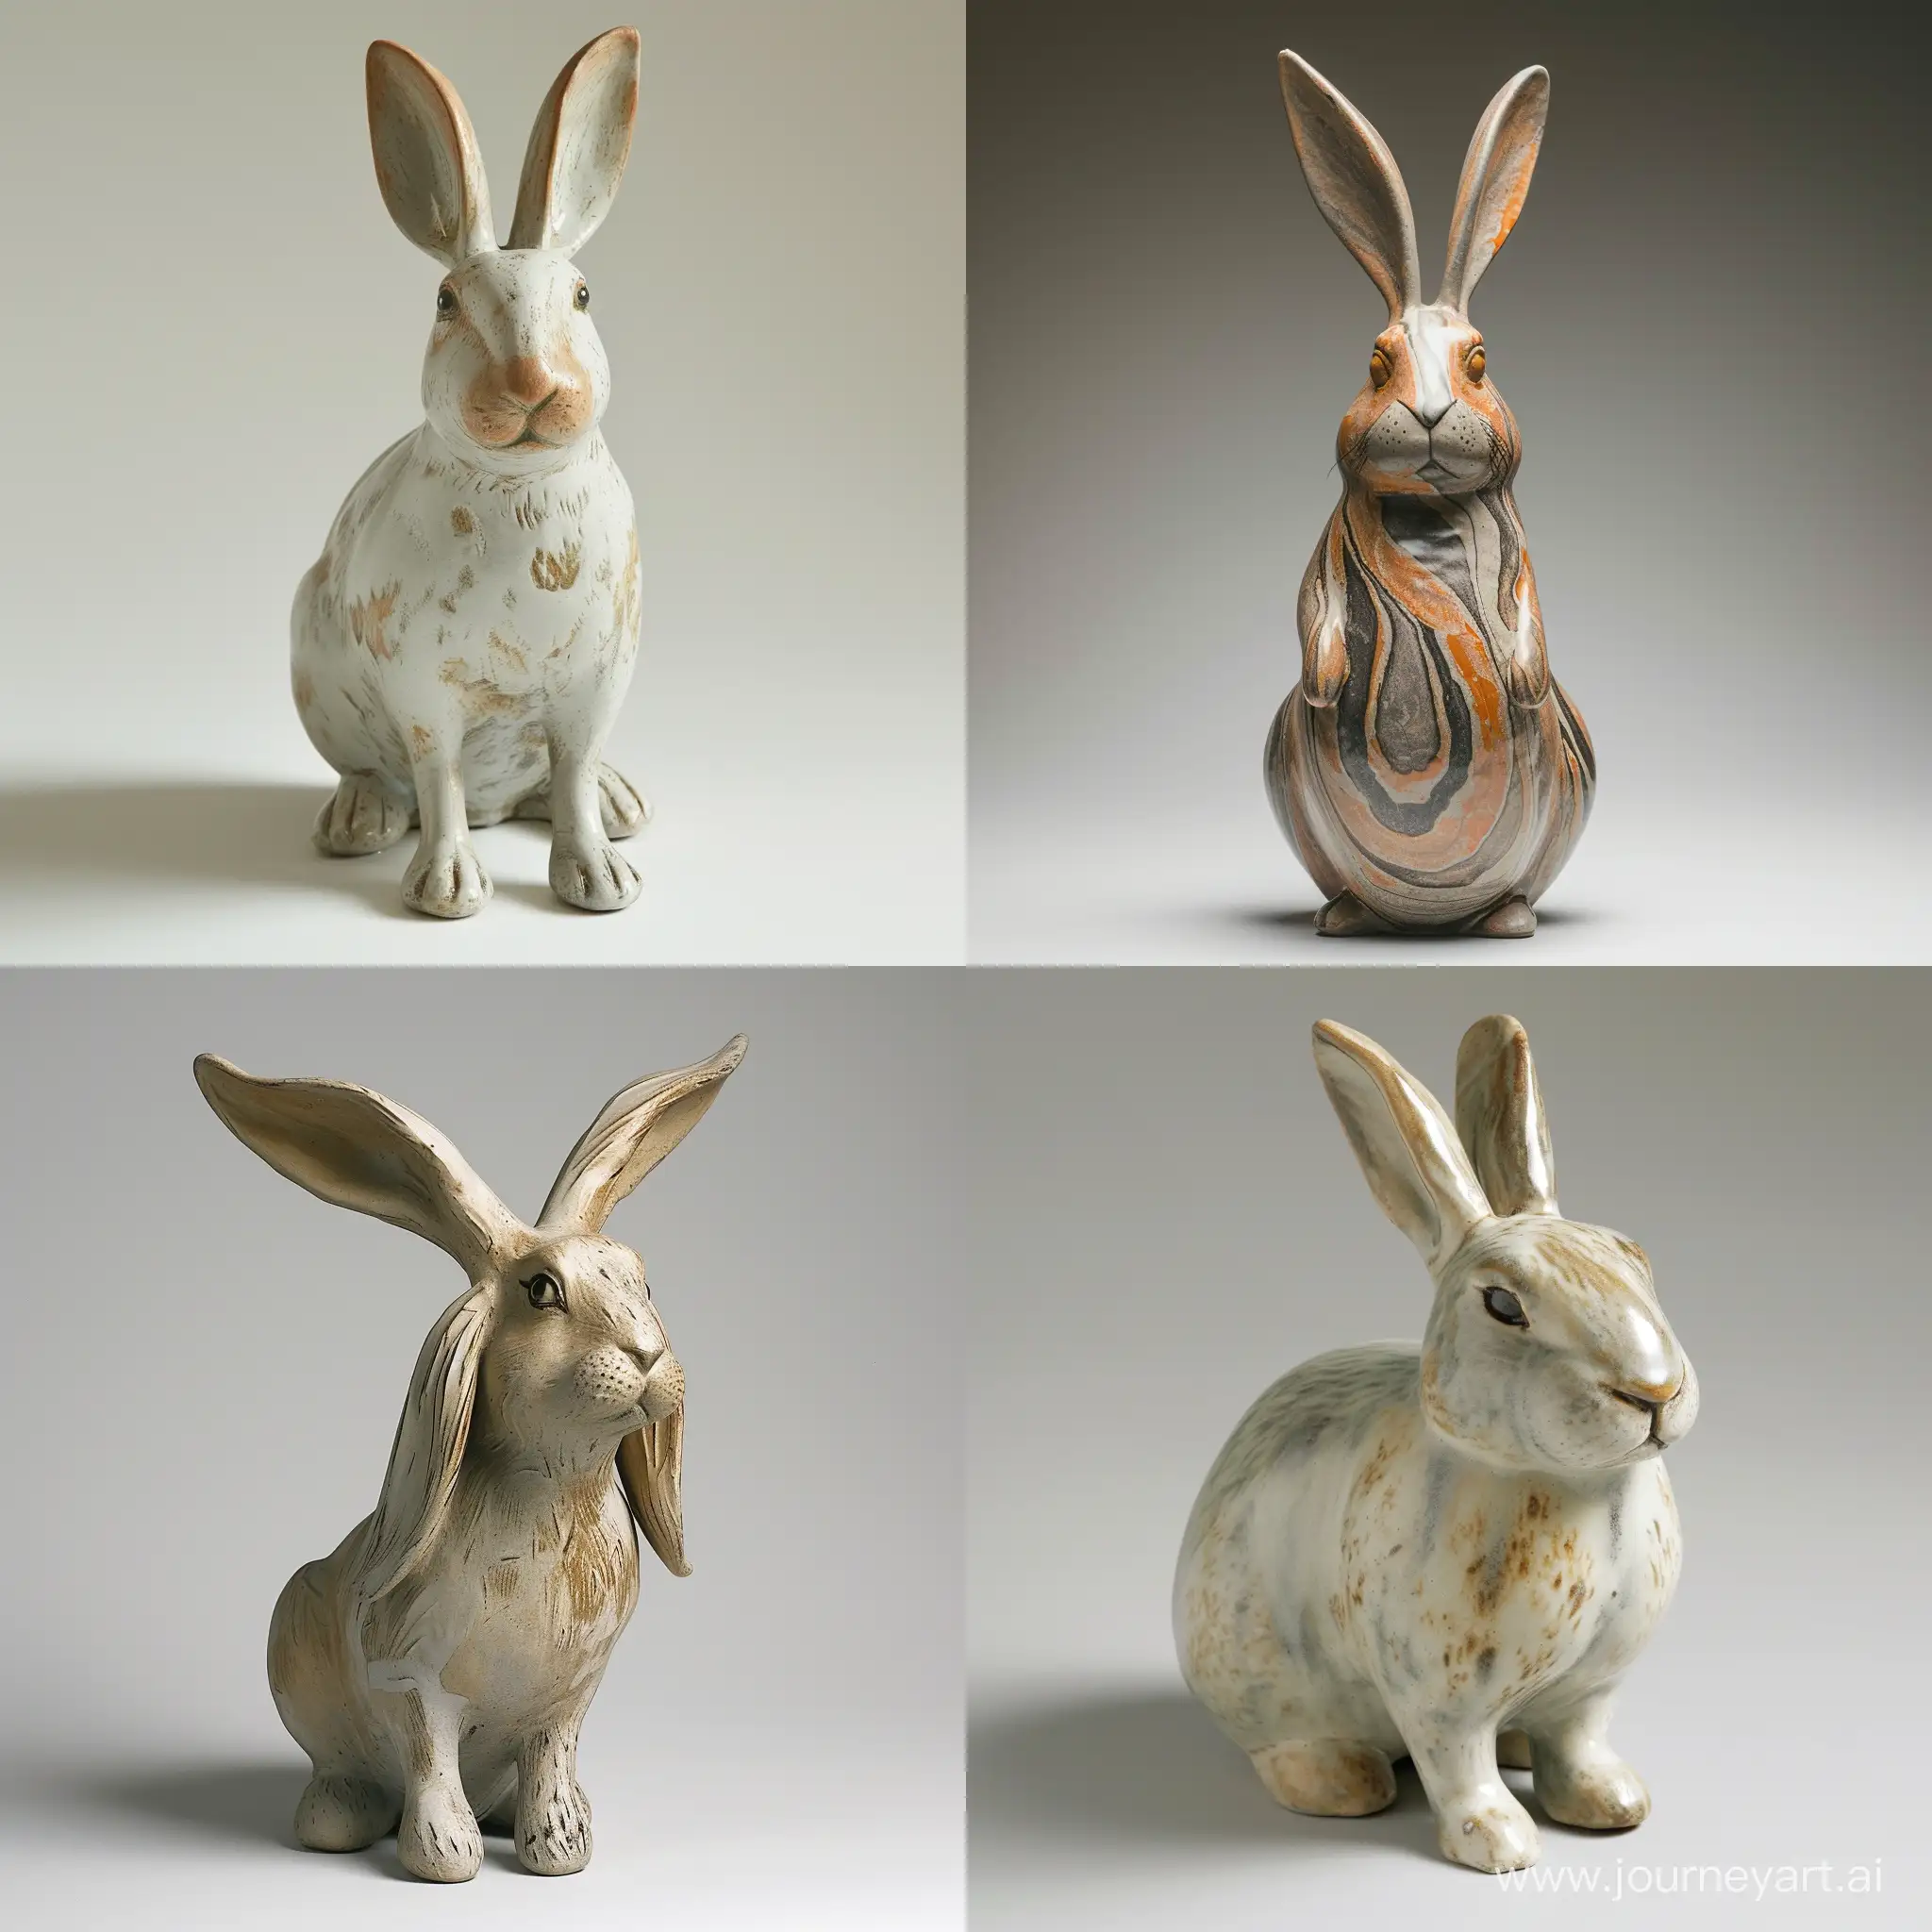 ceramic rabbit,stand strait，positively，face forward，Hair texture
